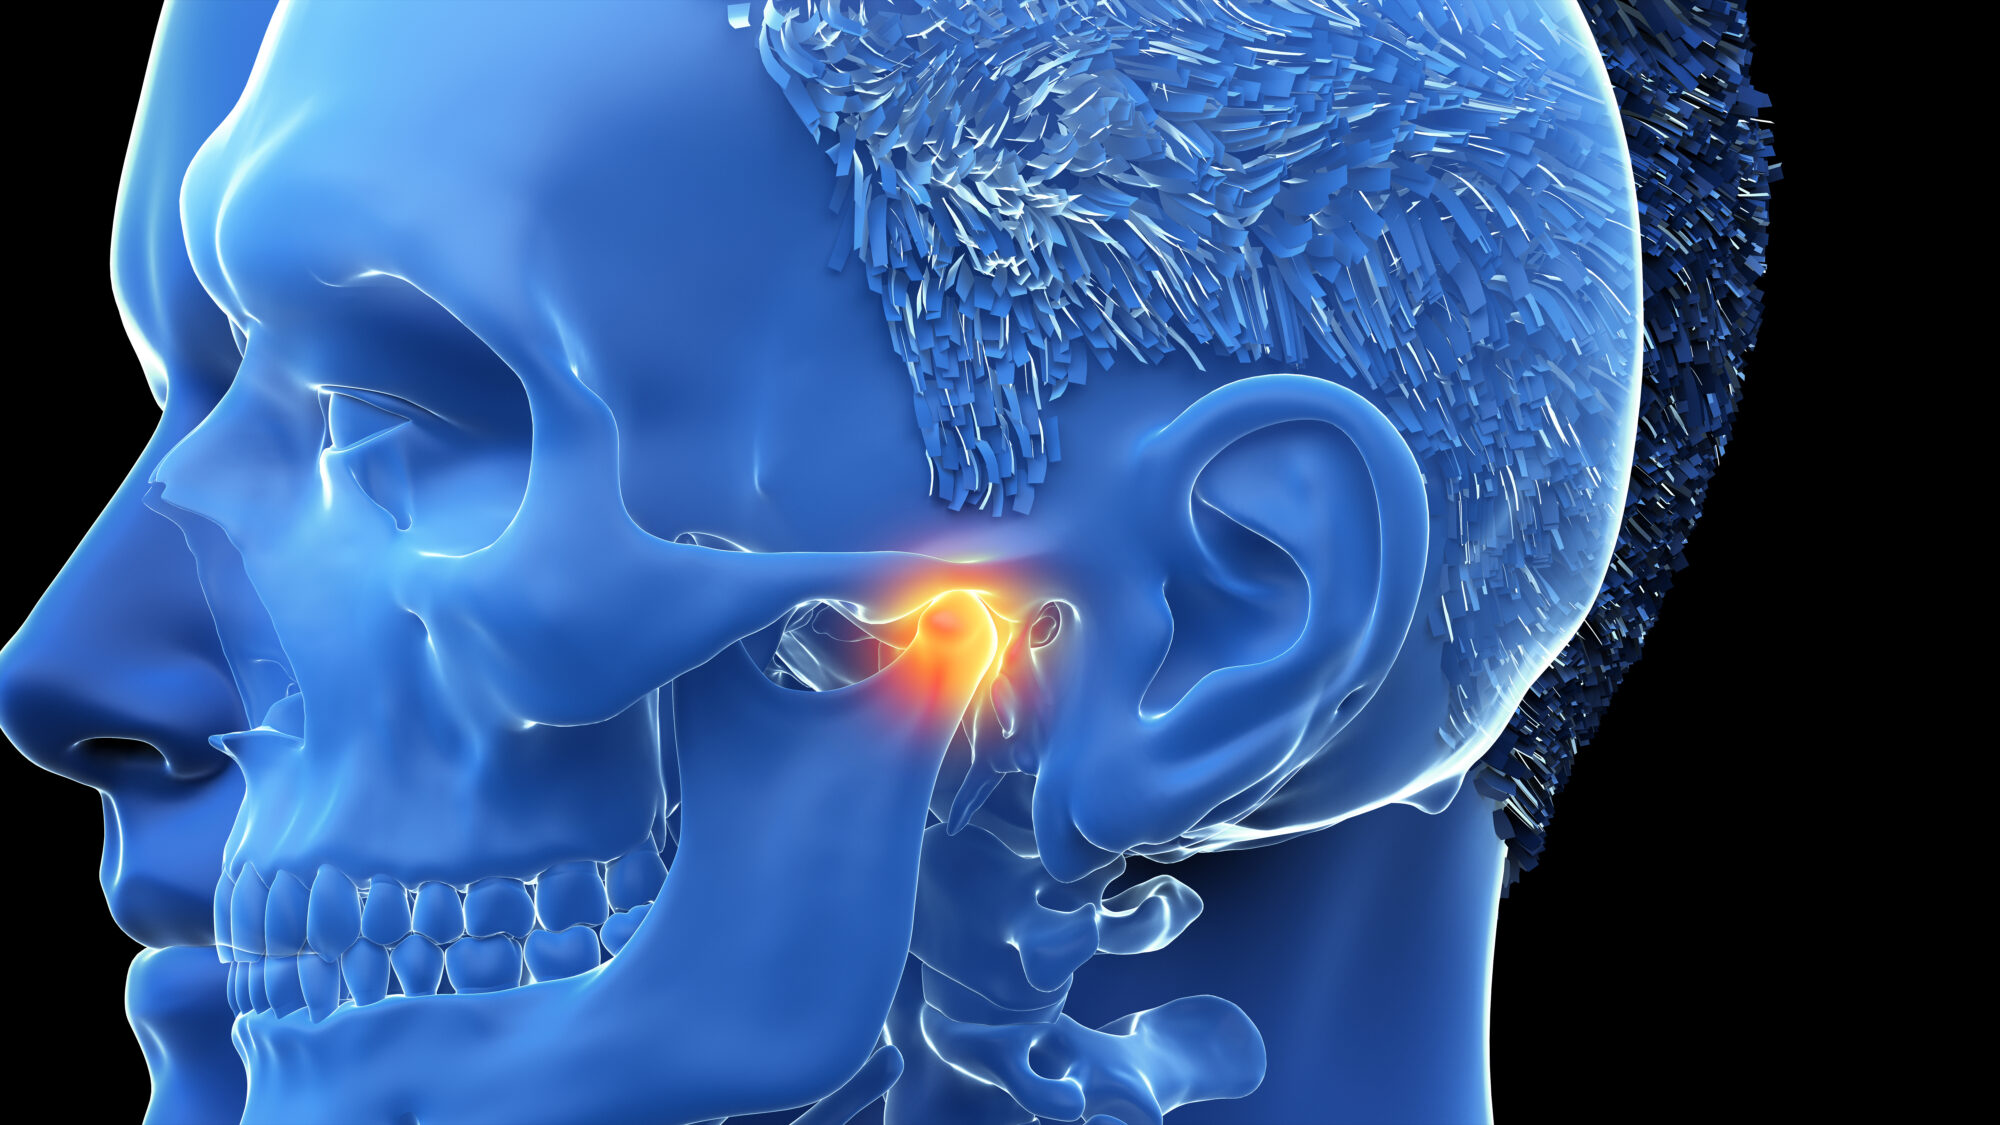 3d rendered illustration of a painful temporomandibular joint